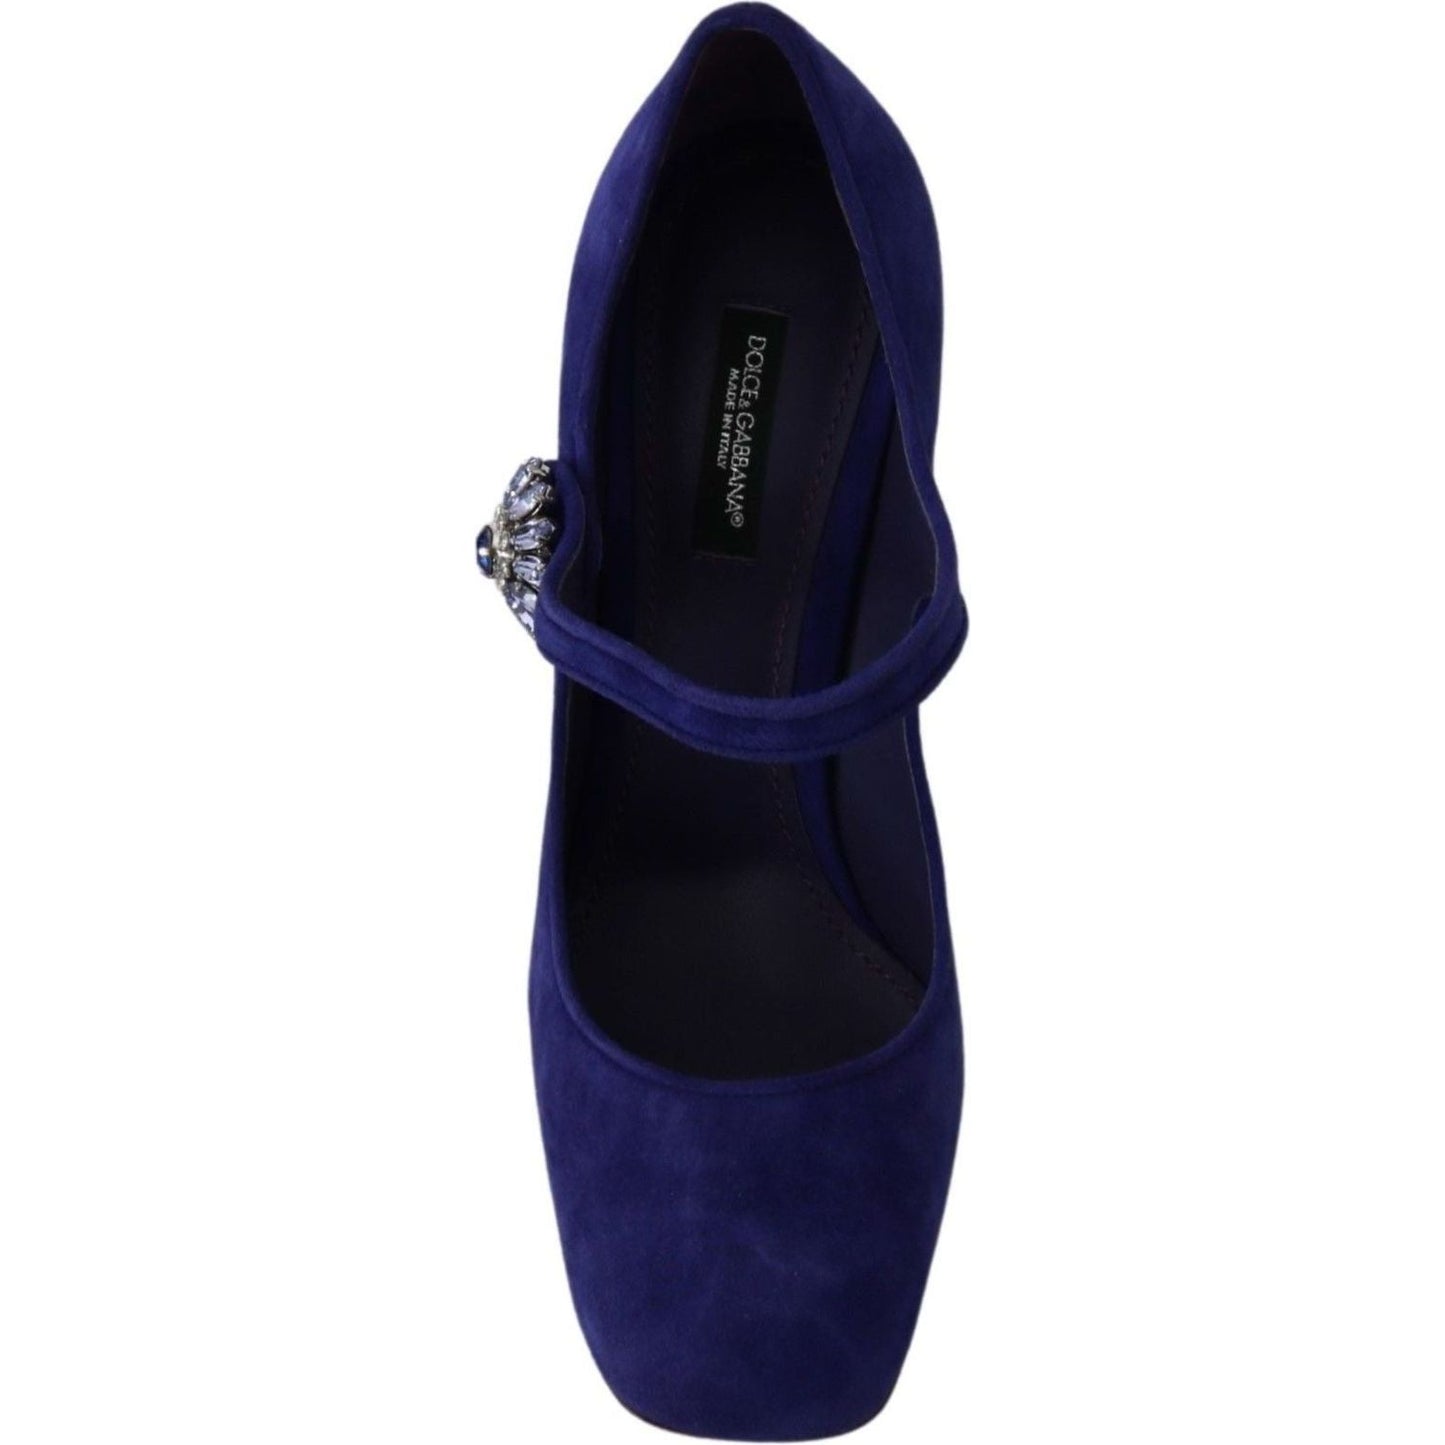 Dolce & Gabbana Elegant Purple Suede Mary Janes Pumps purple-suede-crystal-pumps-heels-shoes IMG_1738-6bfd0de1-7e2.jpg